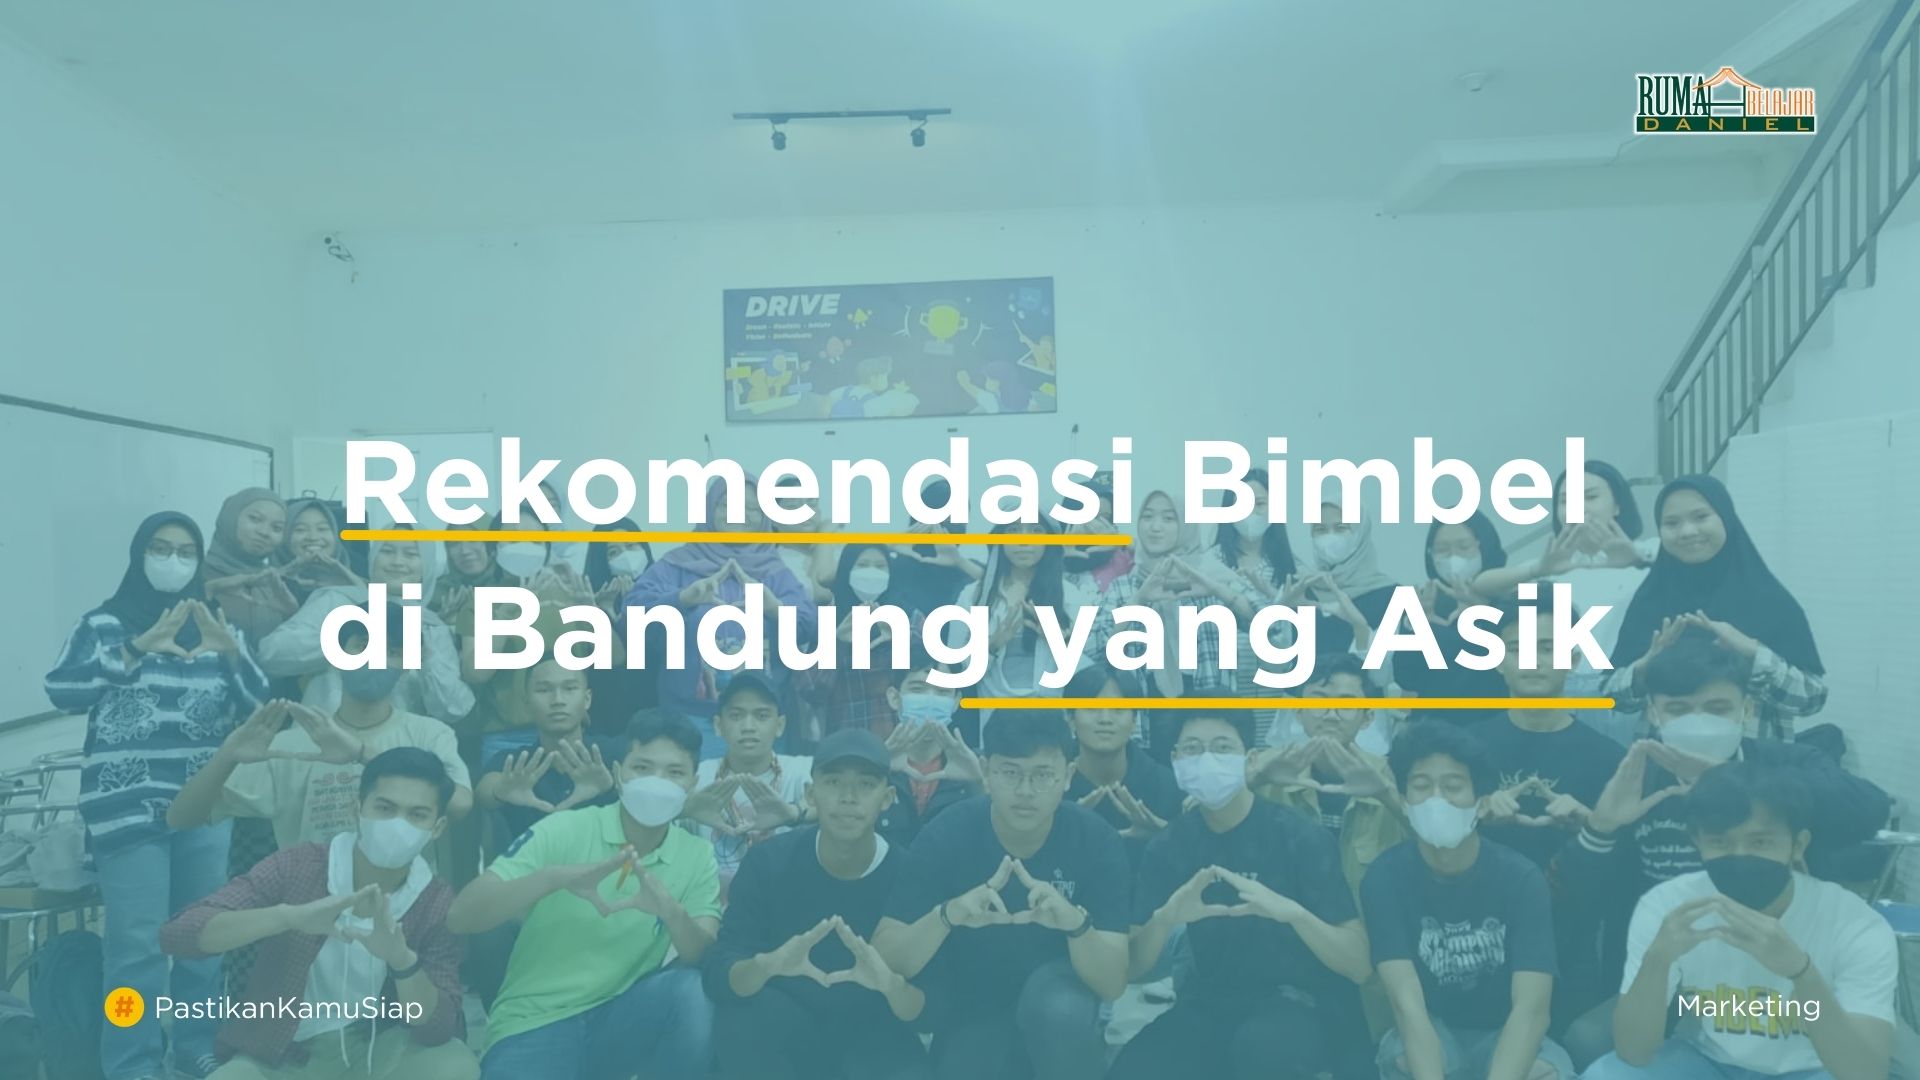 Rekomendasi bimbel di Bandung